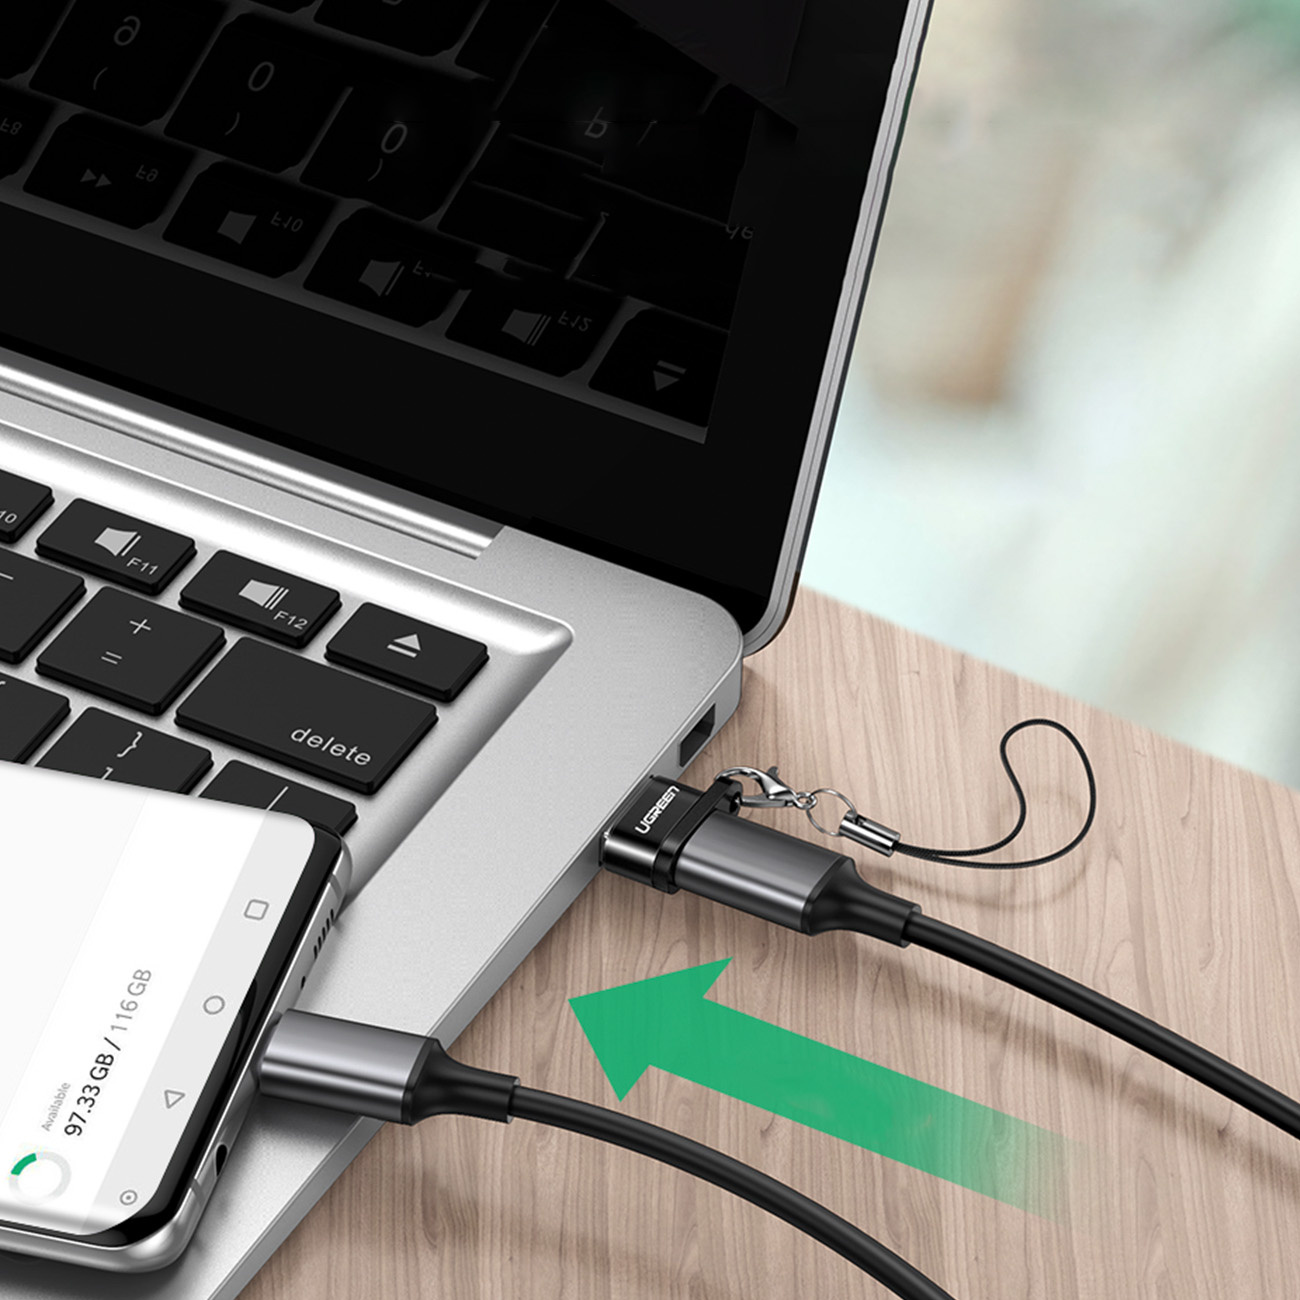 UGREEN Lightning to USB C / USB-C / USB Type C Male Adapter for USB